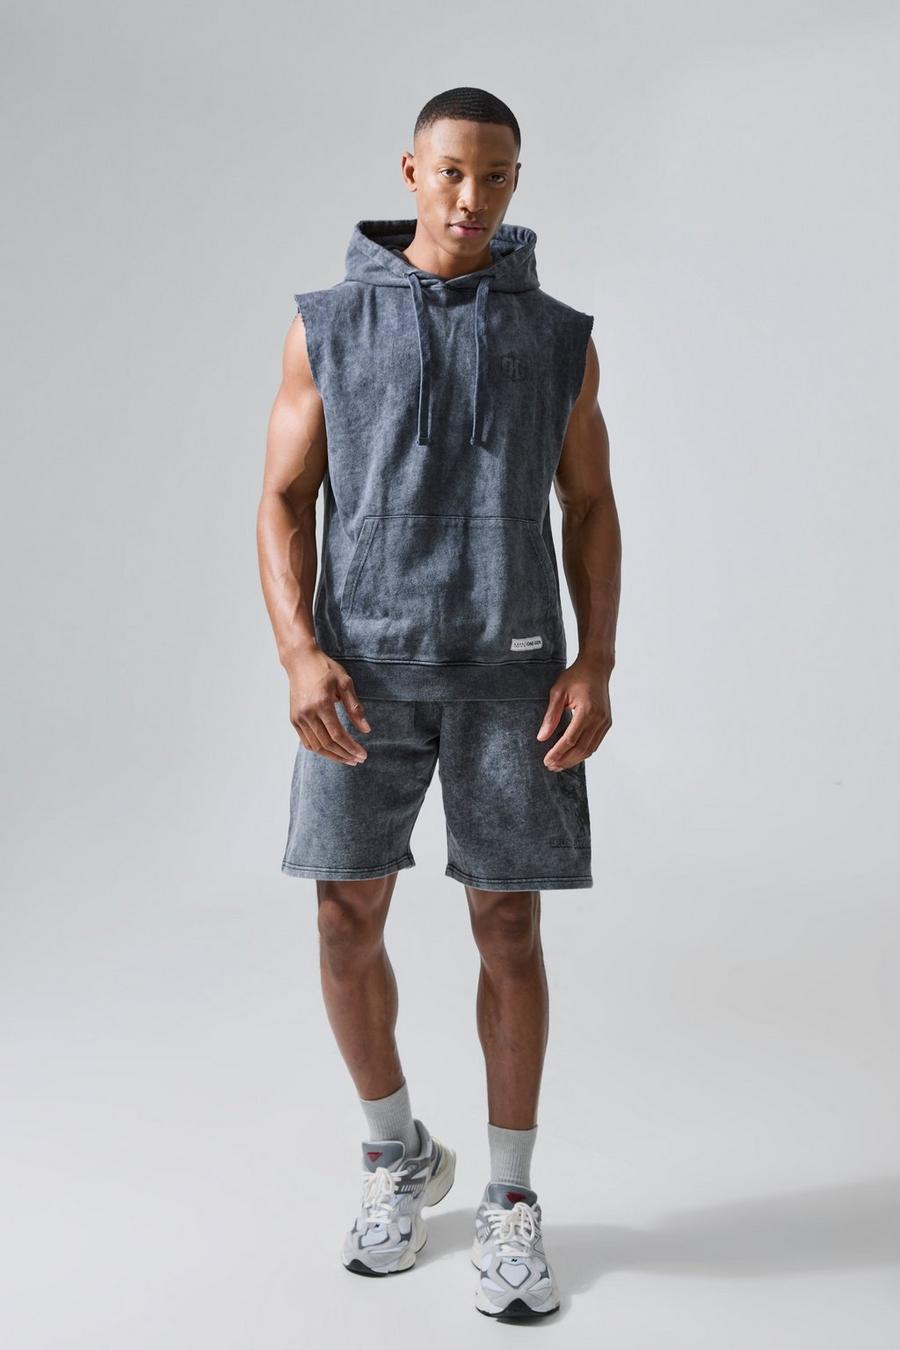 Man Active X Og ärmelloser Trainingsanzug mit Kapuze, Charcoal image number 1